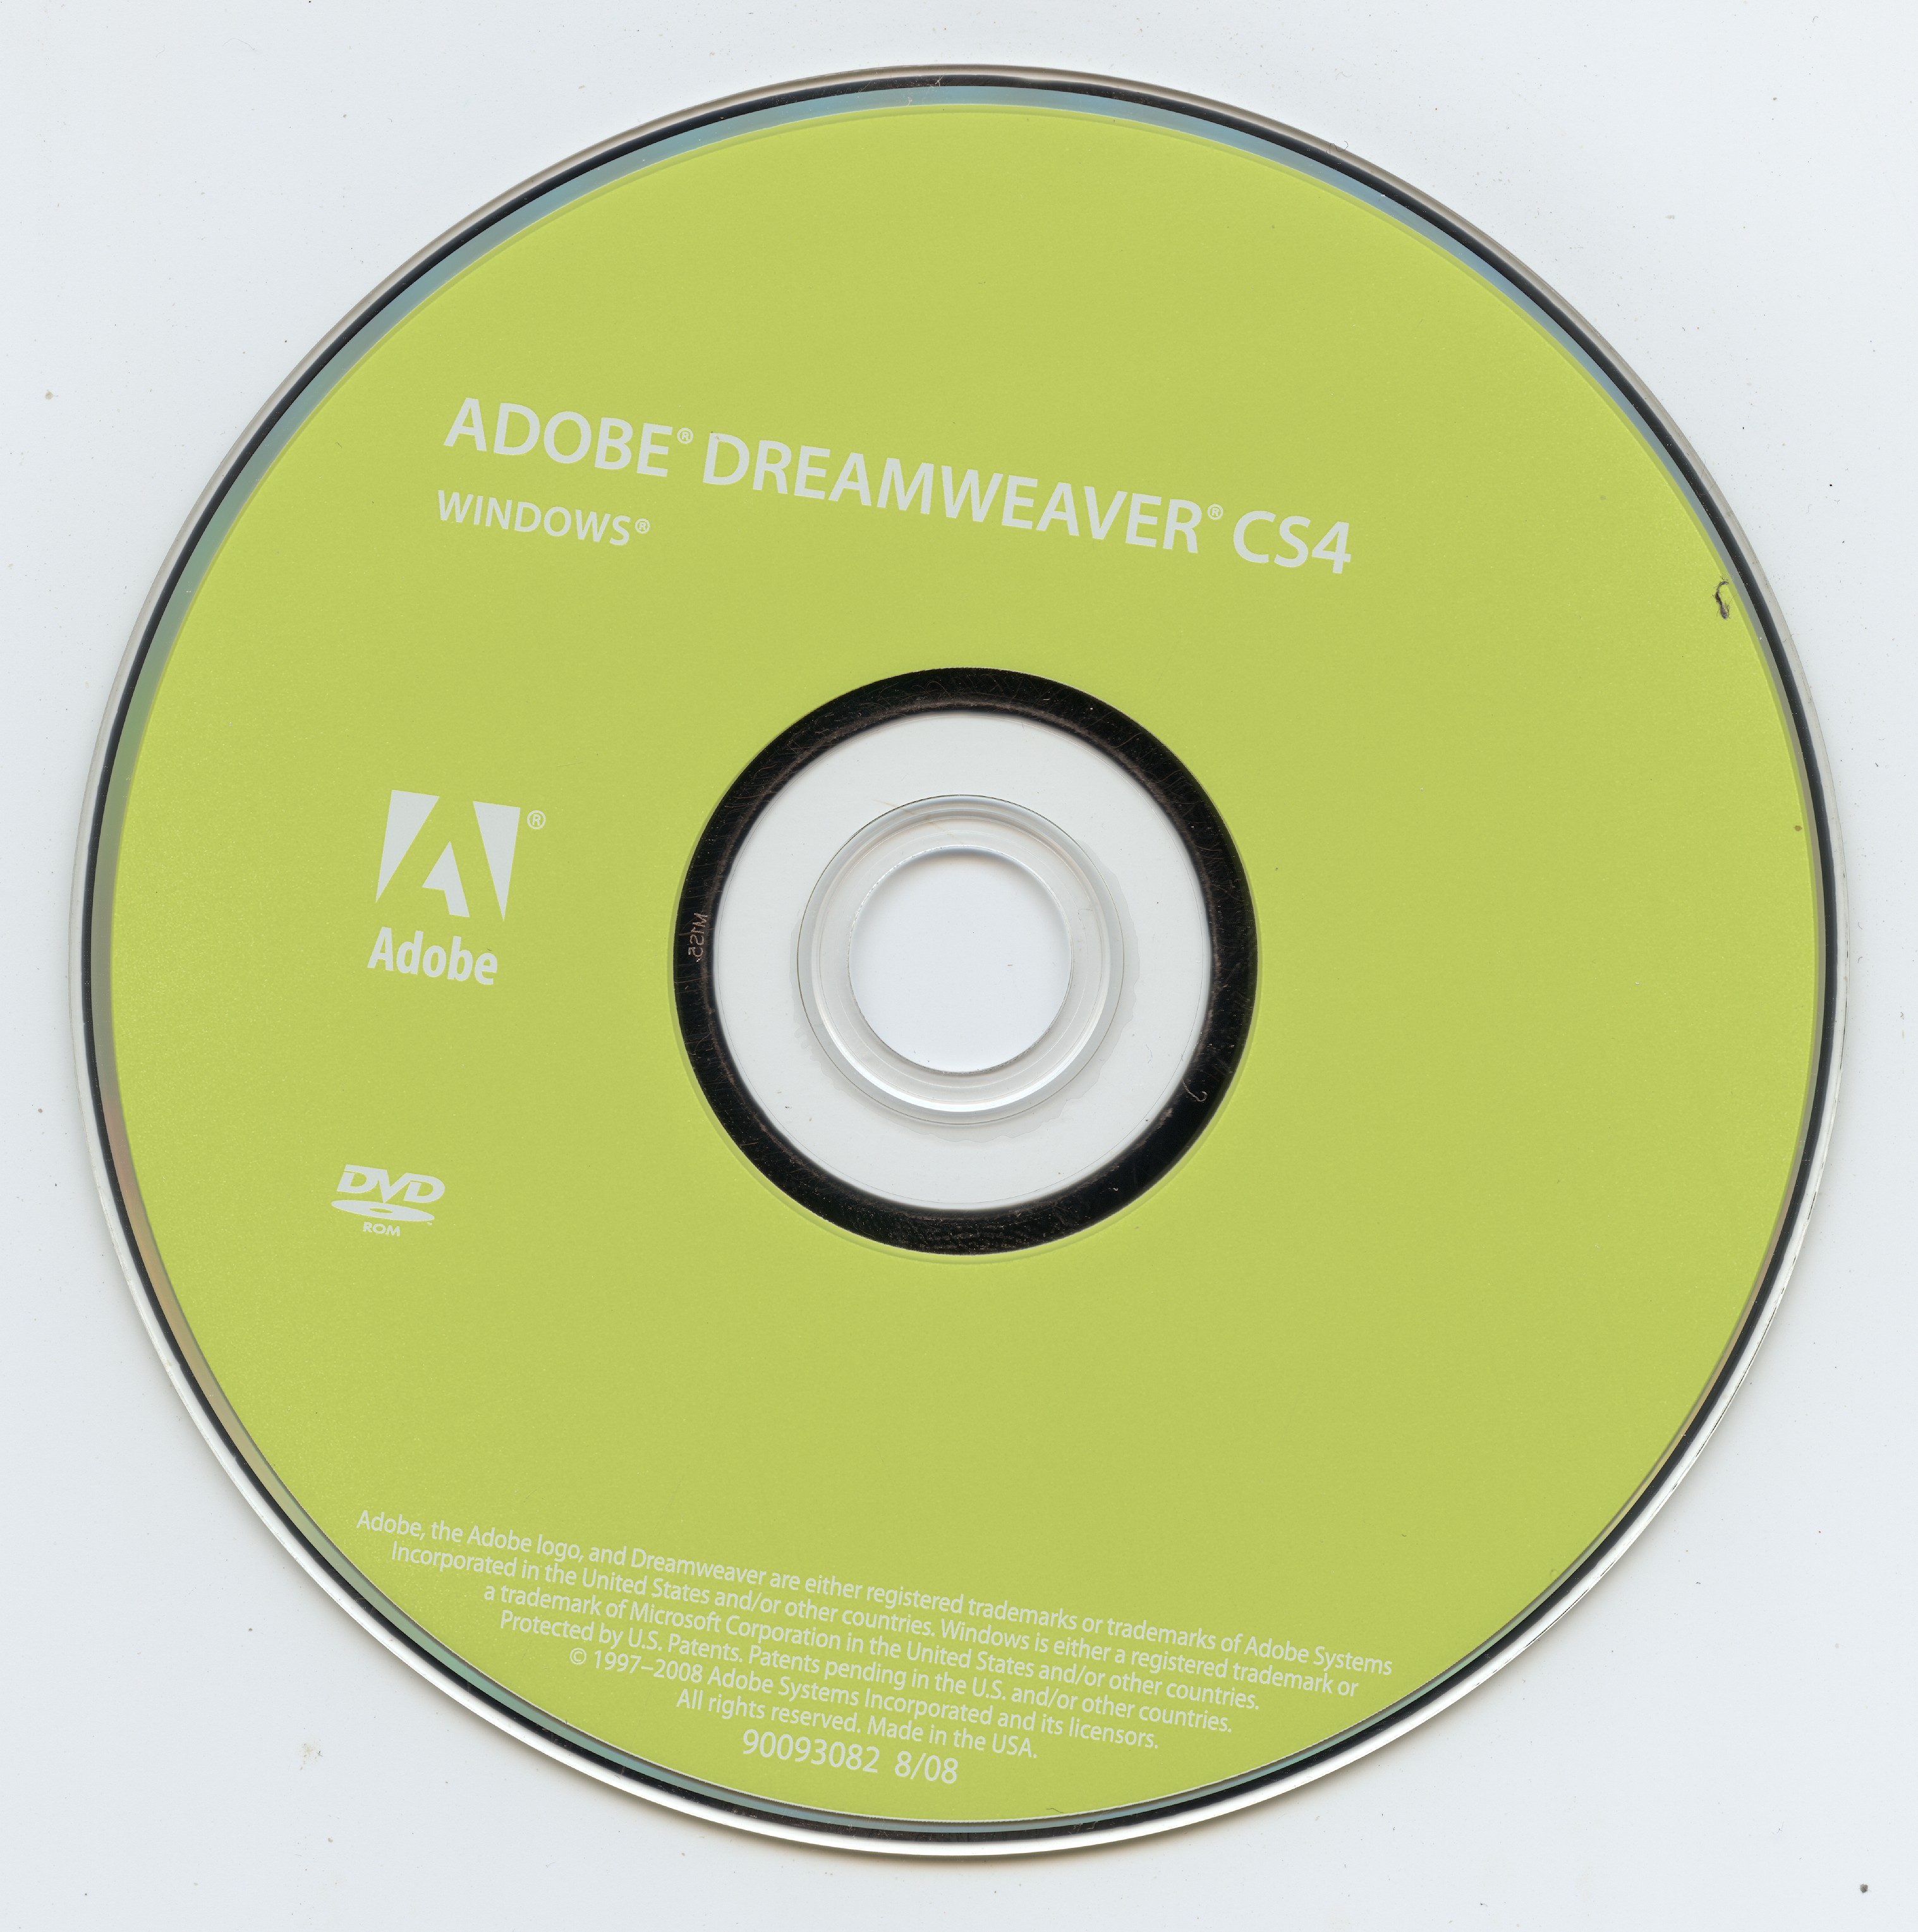 Adobe Dreamweaver CS4 Windows (90093032)(8 08)(2008) : Free 